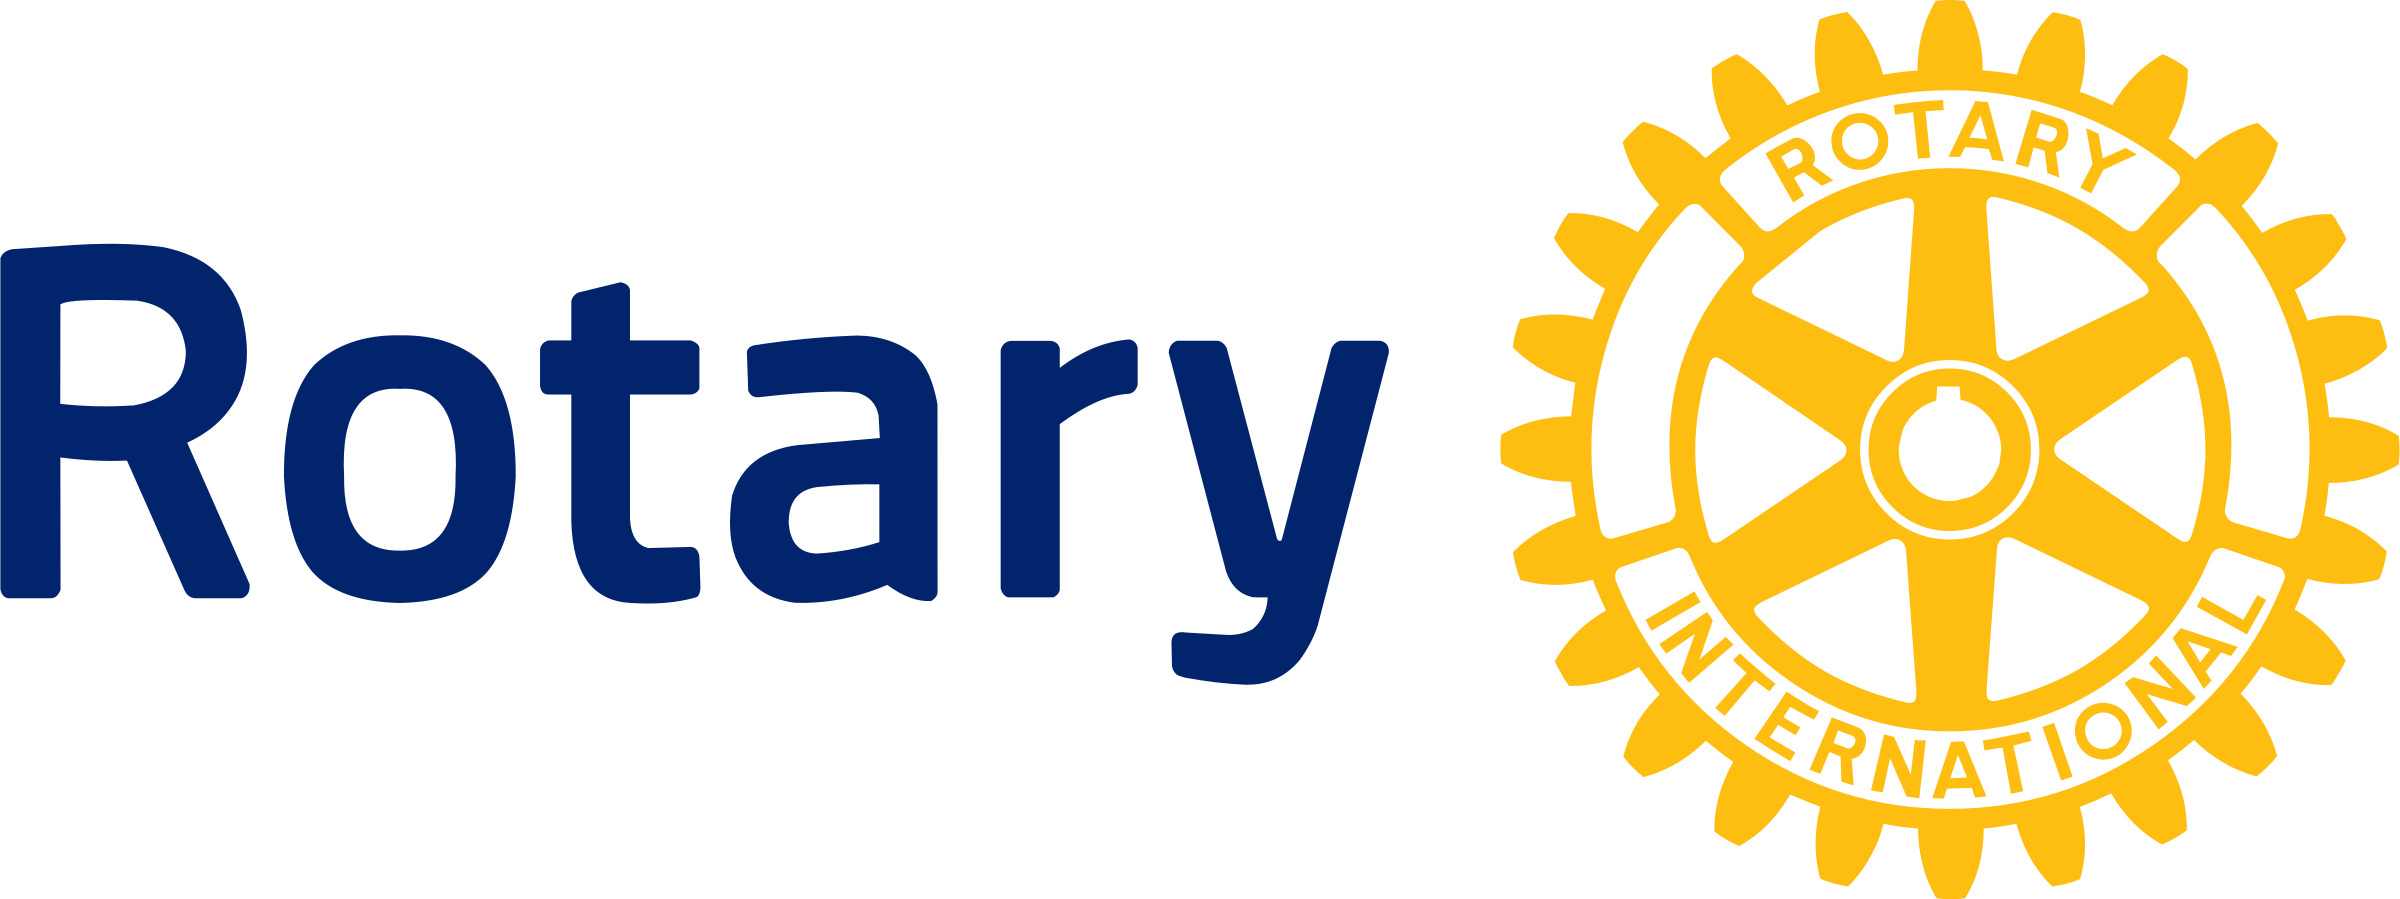 The rotary international logo on a black background.